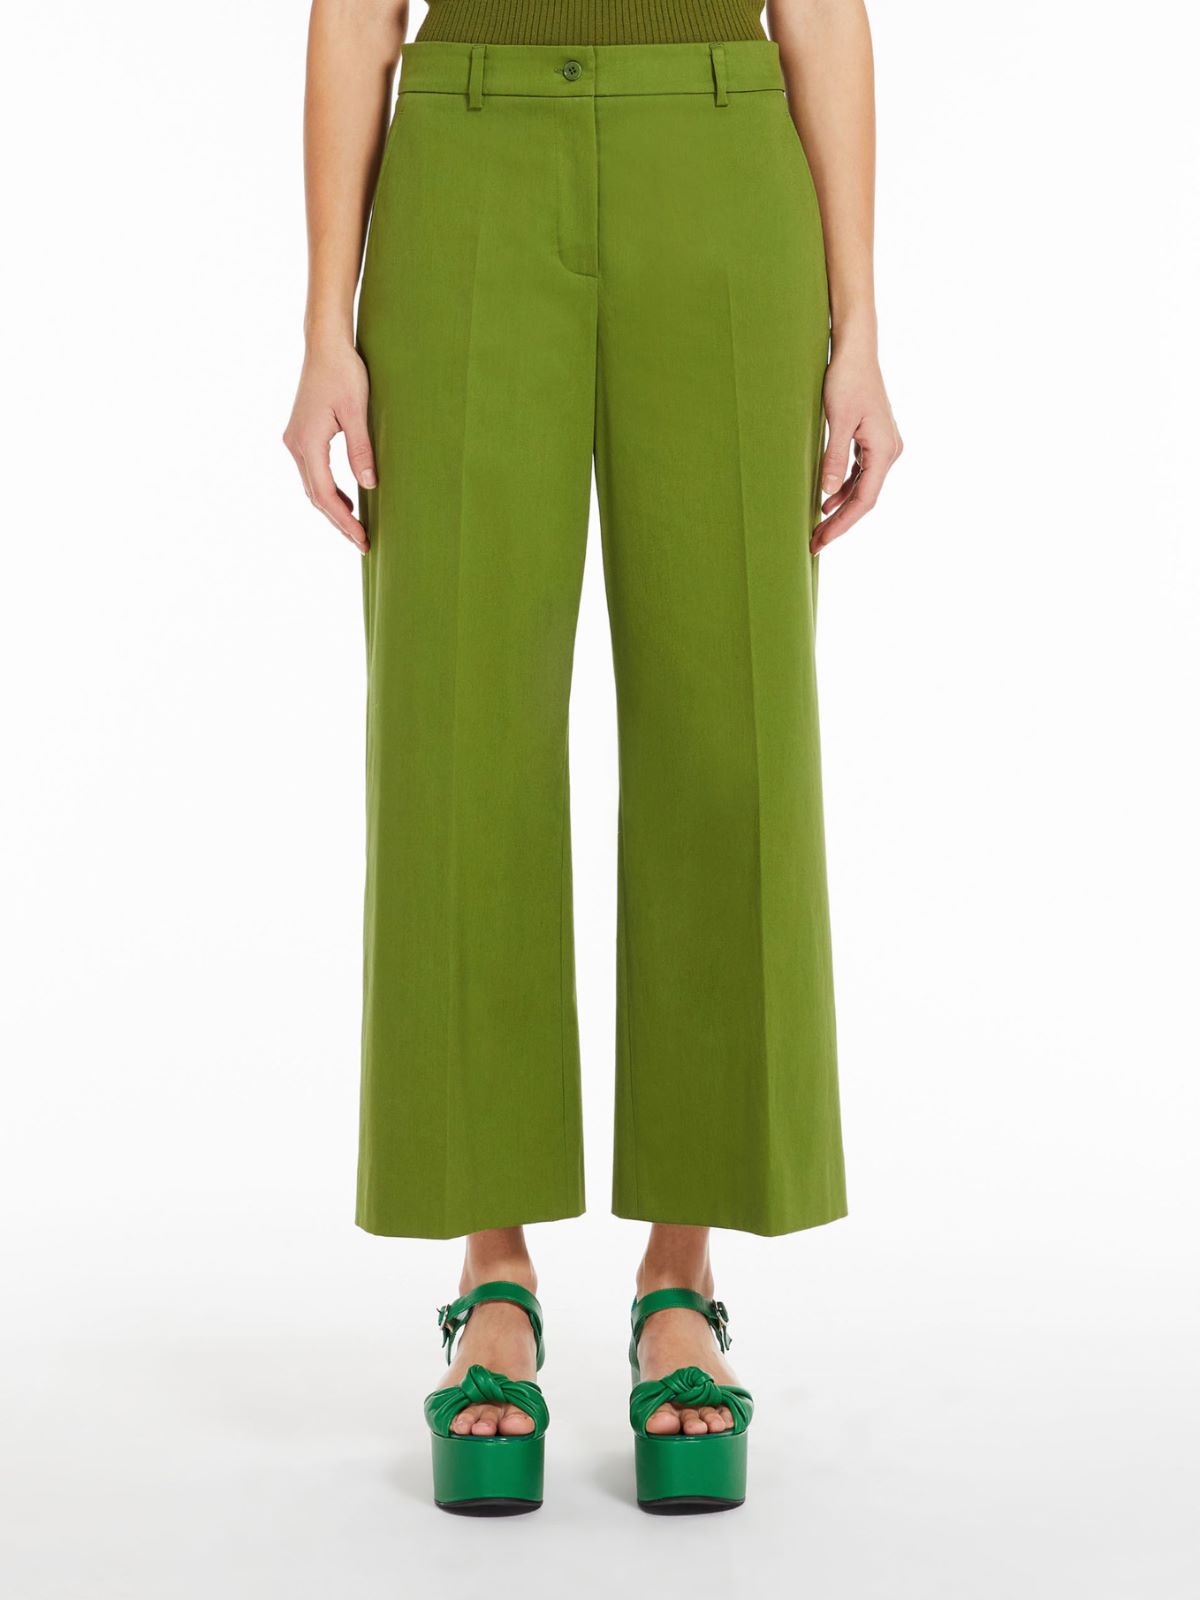 Cropped satin trousers, green | Weekend Max Mara